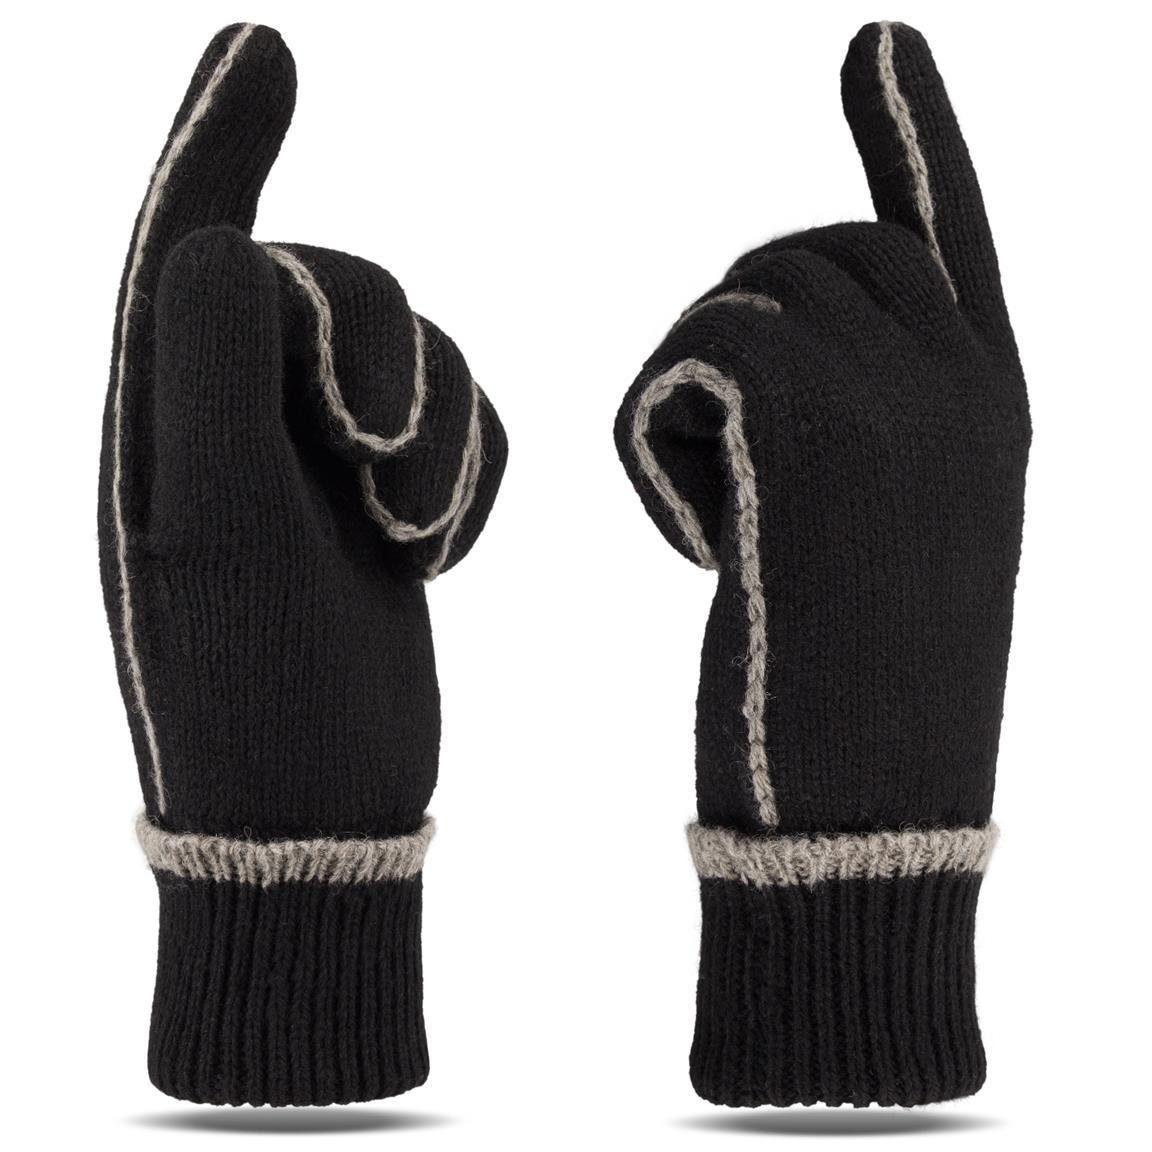 Tarjane Strickhandschuhe 3M Thinsulate Unisex Handschuhe Wollhandschuhe Schwarz/Grau